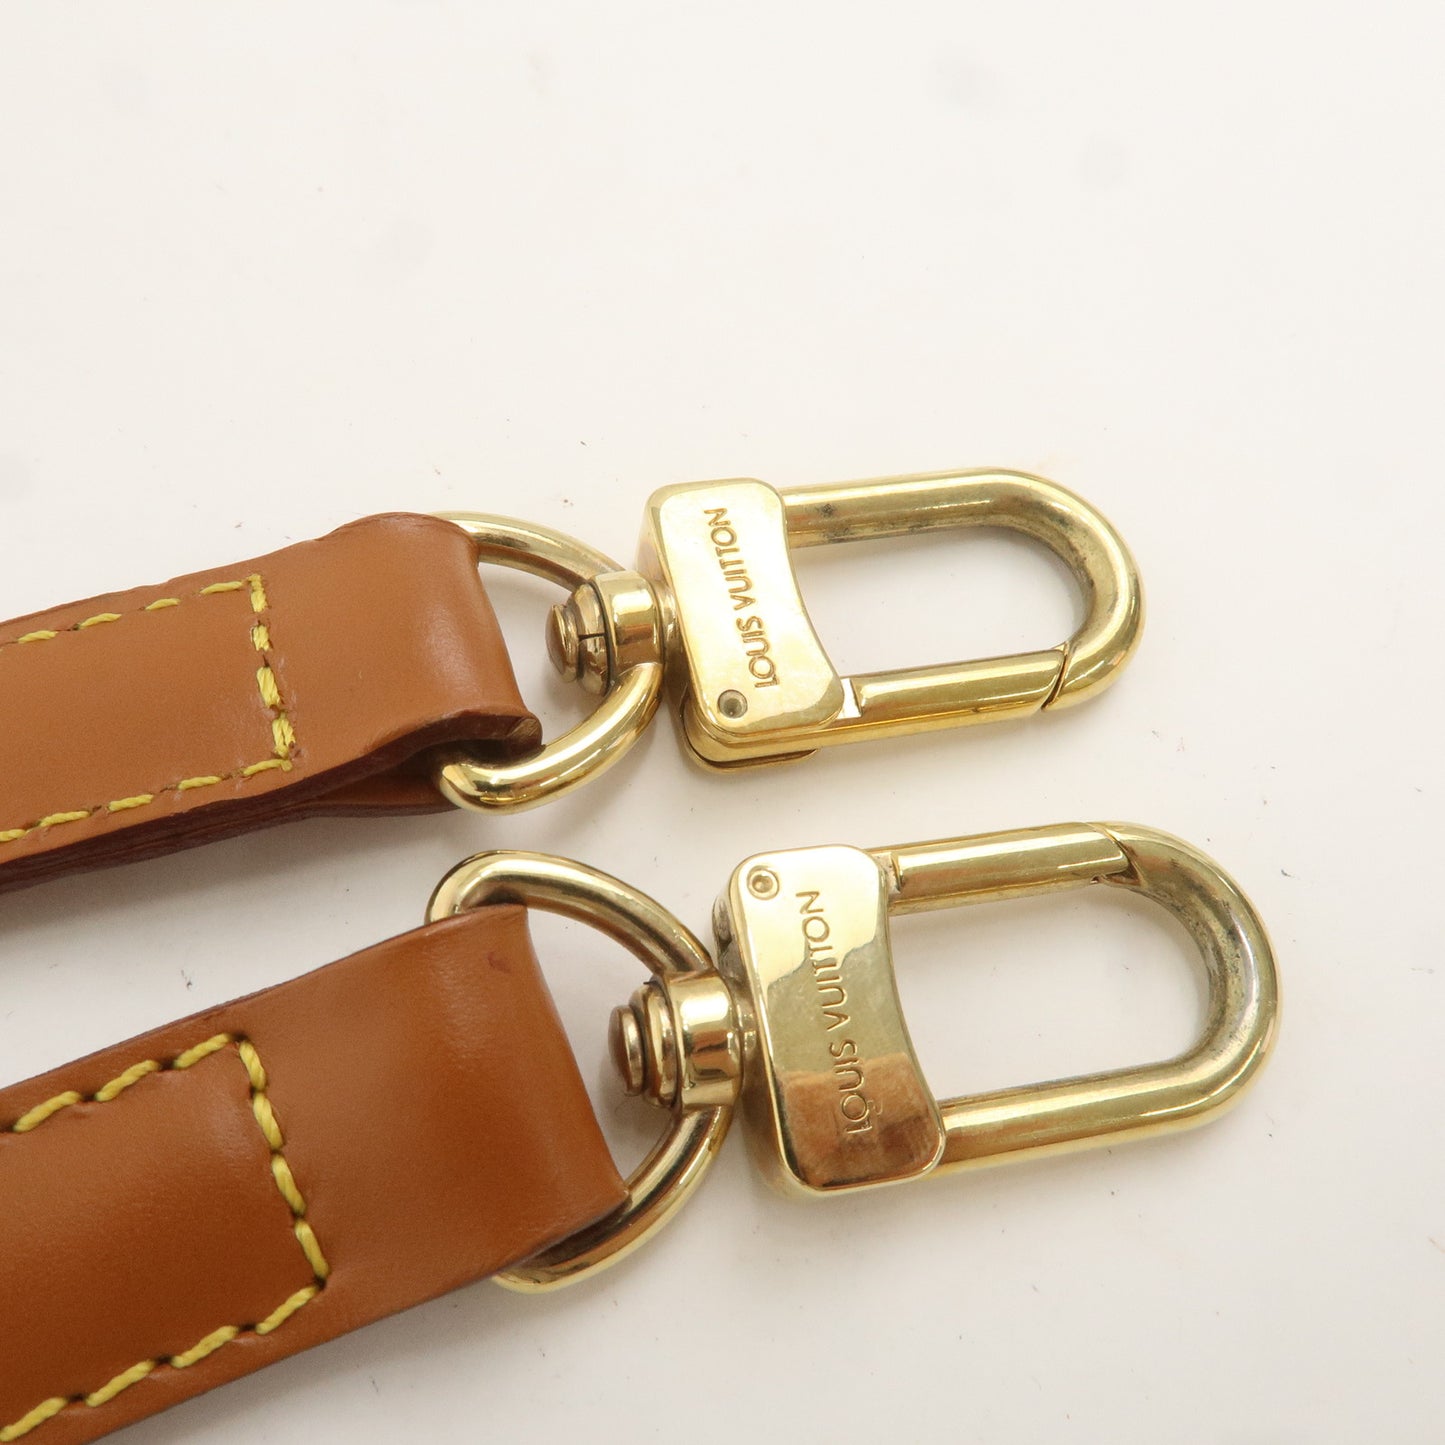 Louis Vuitton Leather Shoulder Strap for Epi Bag Zipang Gold